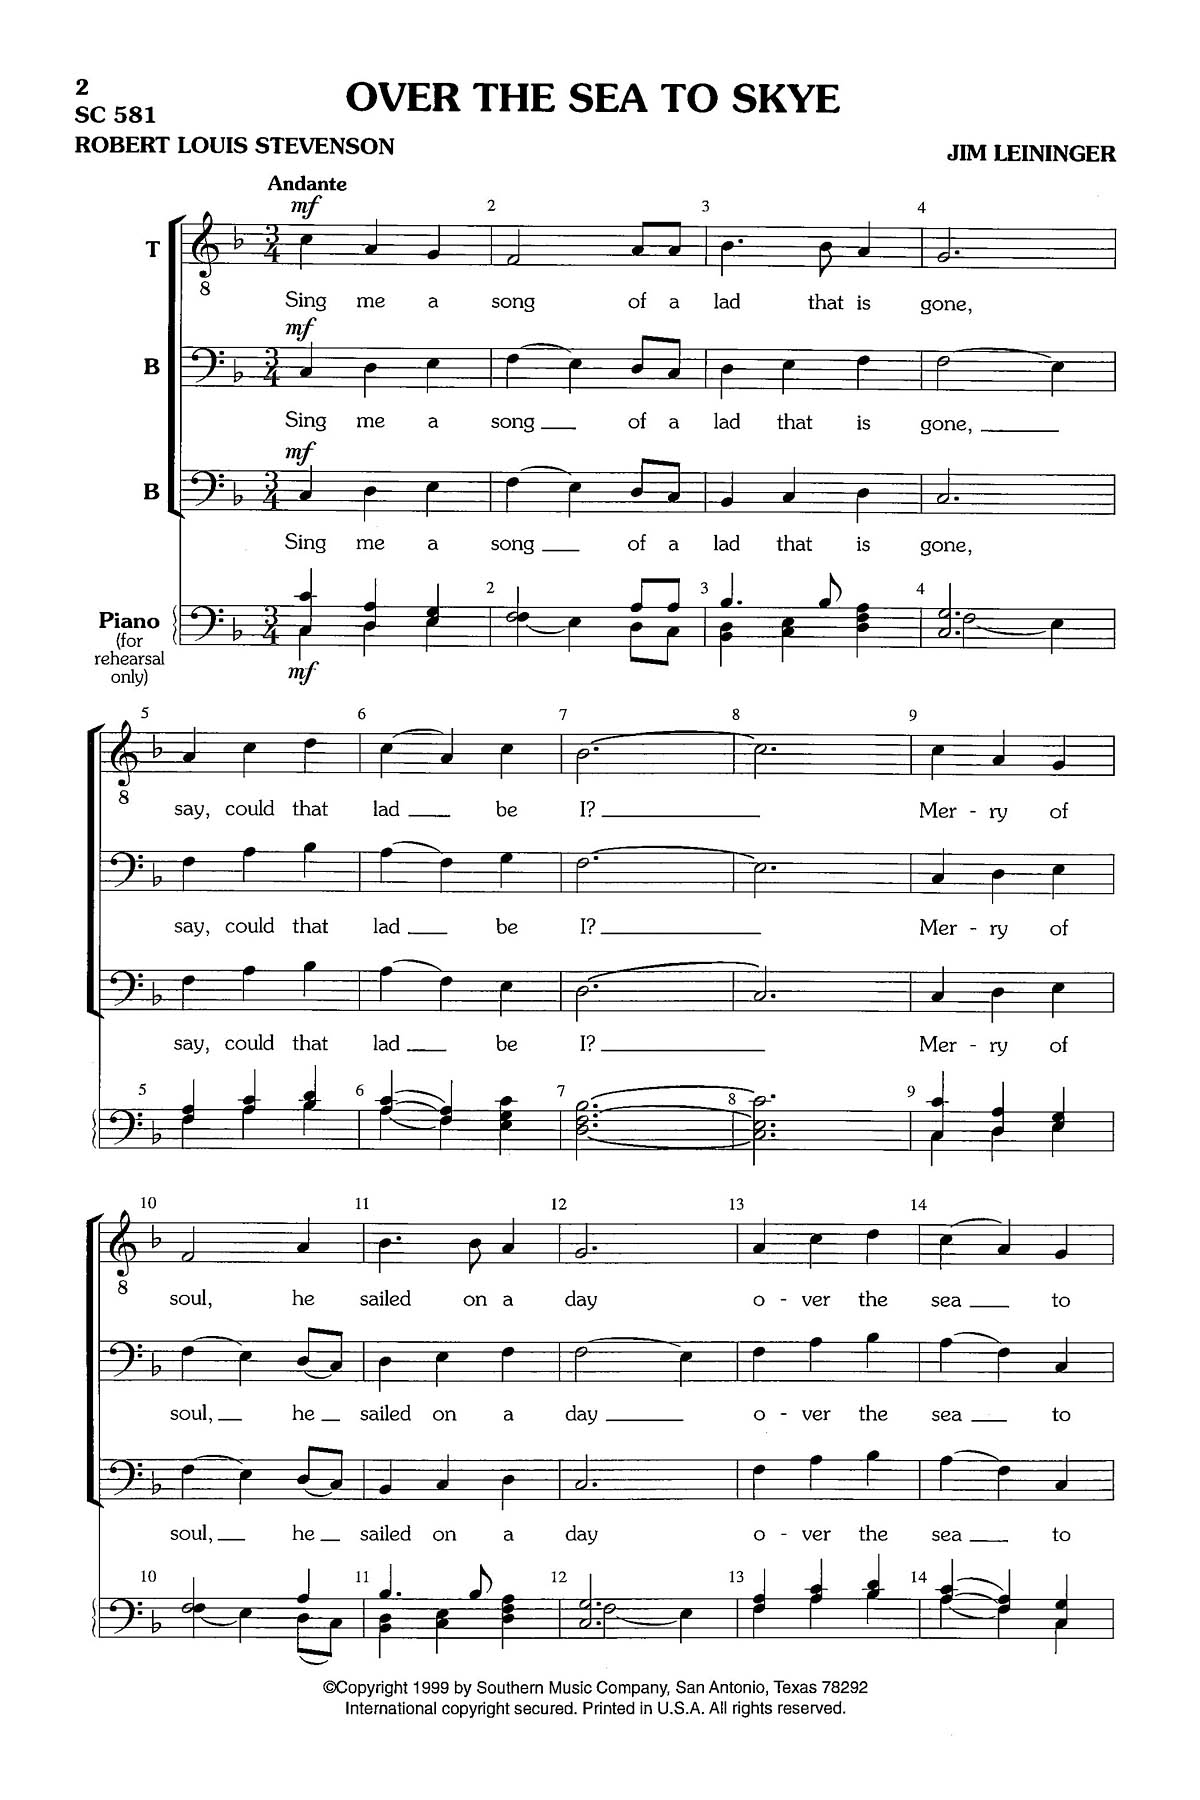 Anne McGinty John Edmondson: Discovery Band Book #1 - Alto Saxophone: Concert